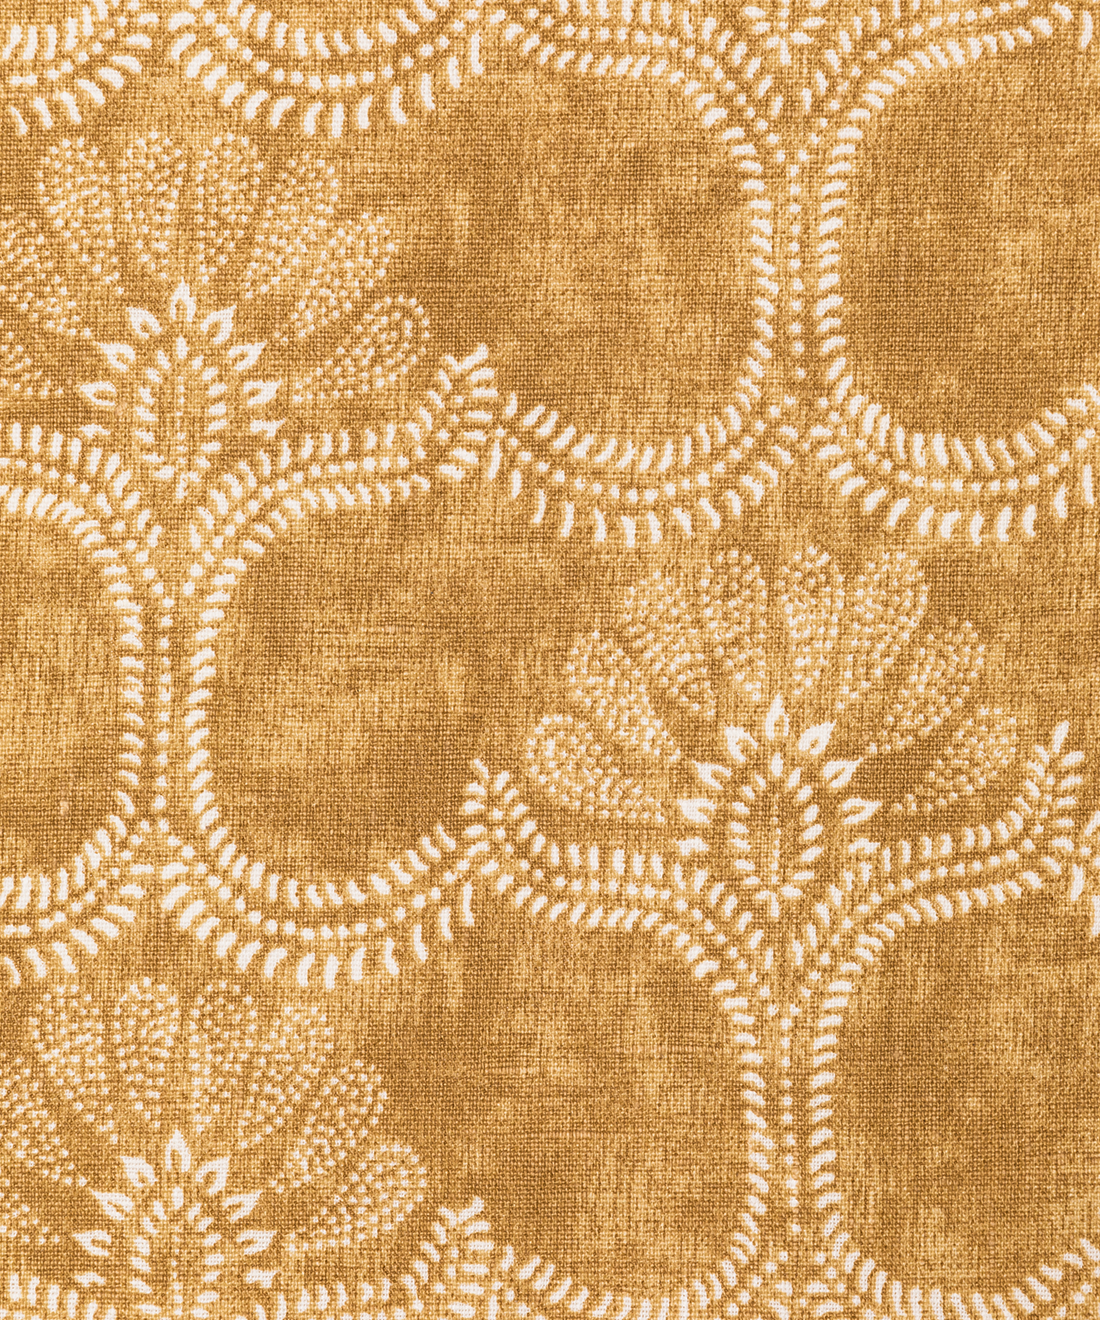 Whiteman & Mellor's Arabesque in Ochre, Linen Fabric by the Meter